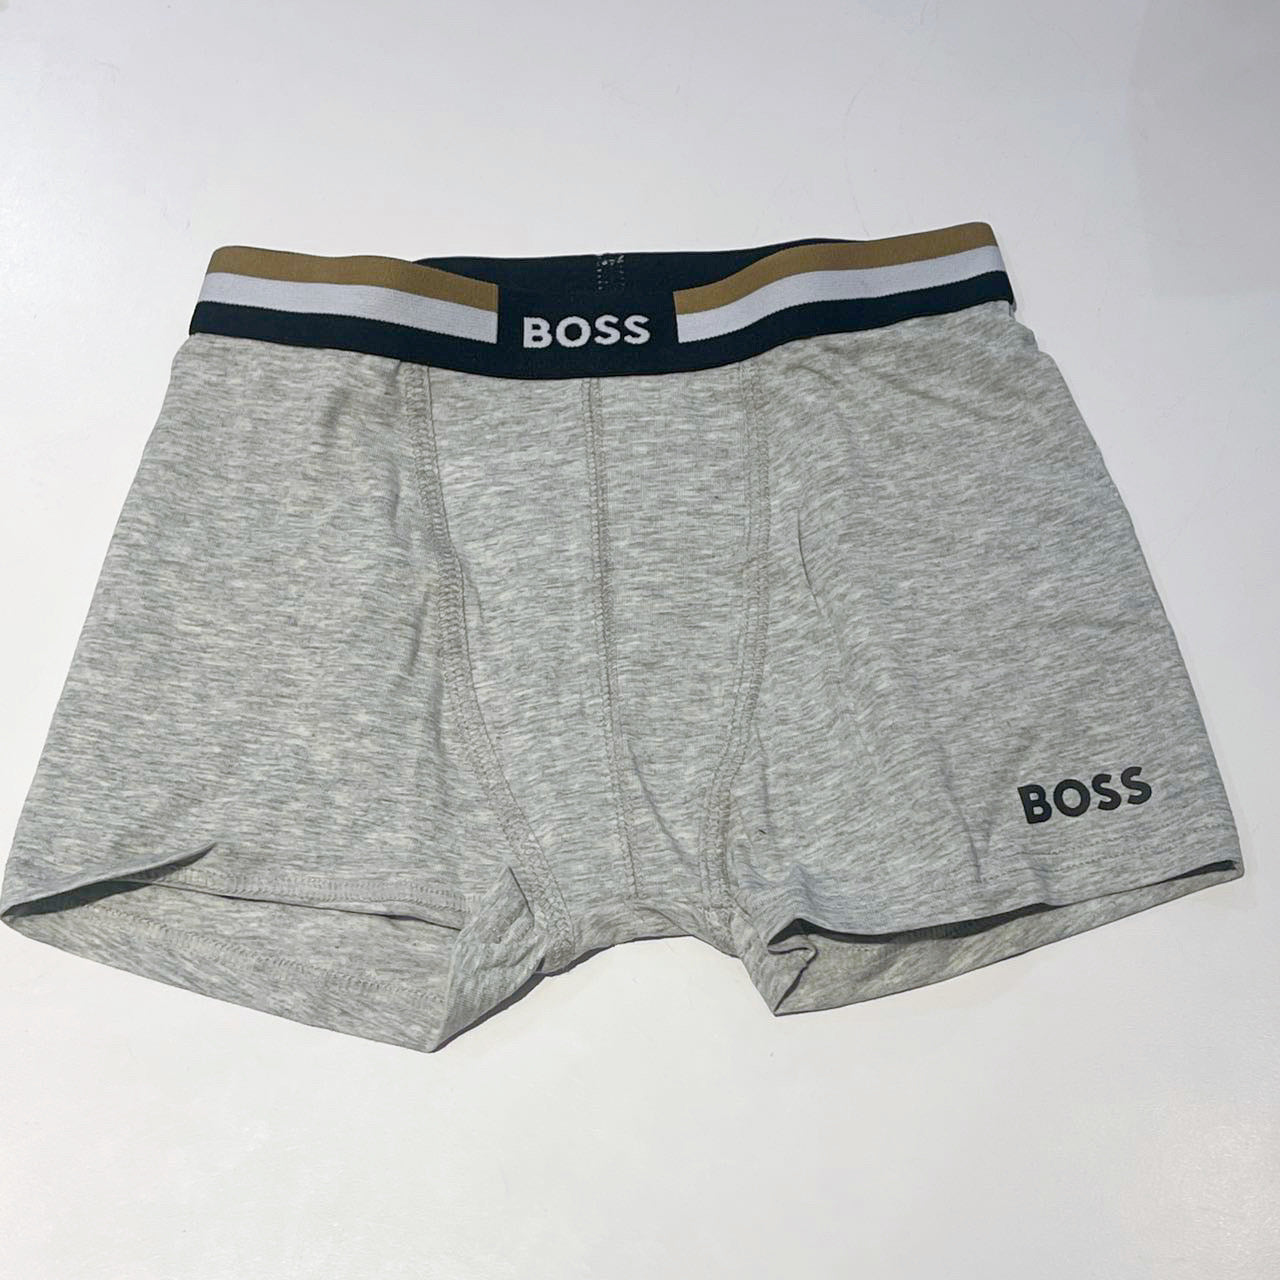 Boss Set of 2 Boxer Shorts(Dark Navy , Grey)